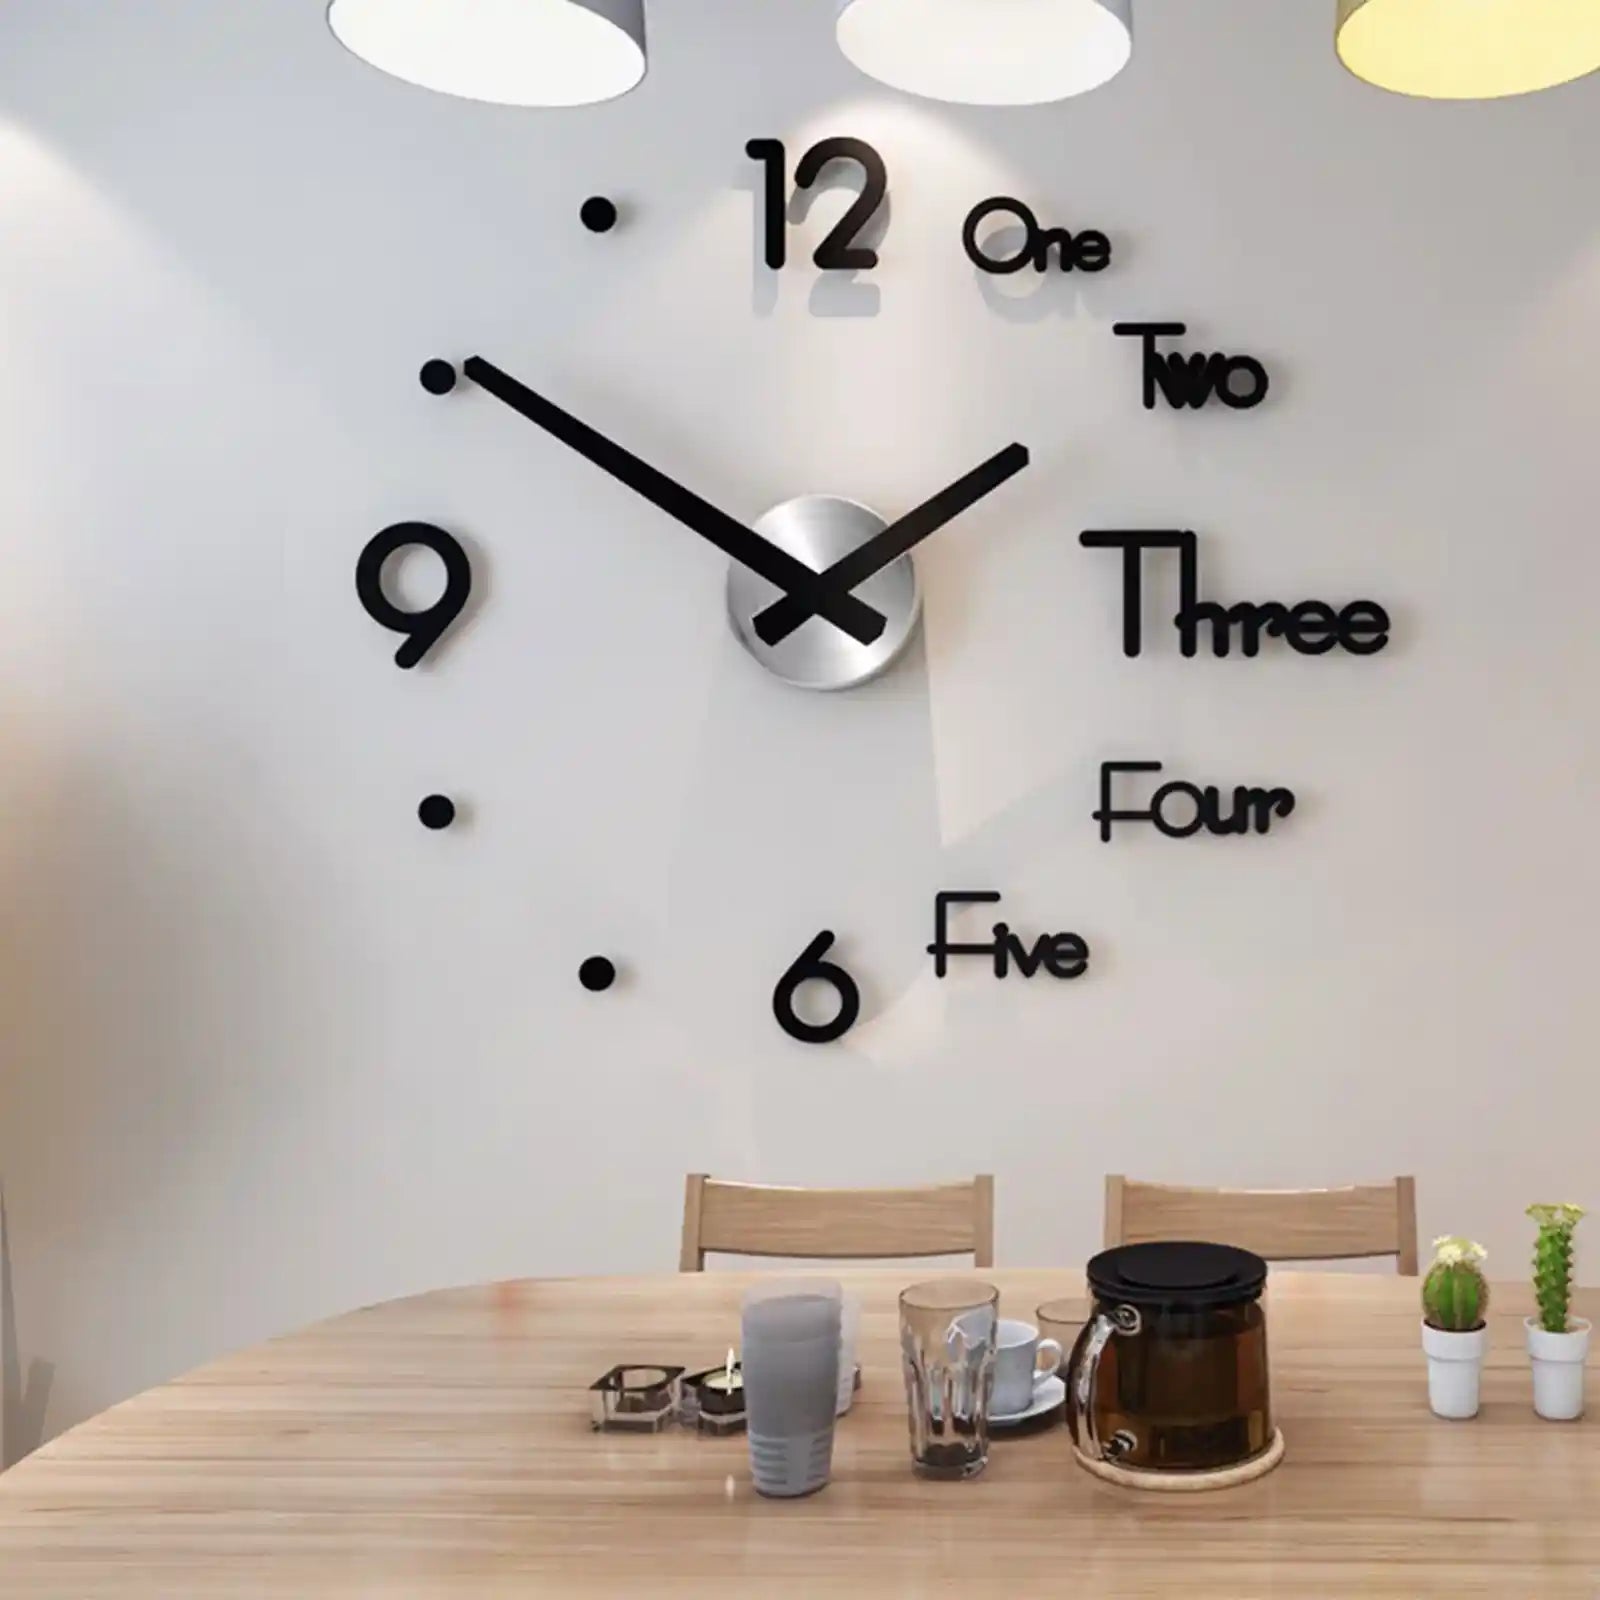 Large Wall Clock Modern Design 3D Wall Sticker Clock Silent Home Decor Living Room Quartz Horloge